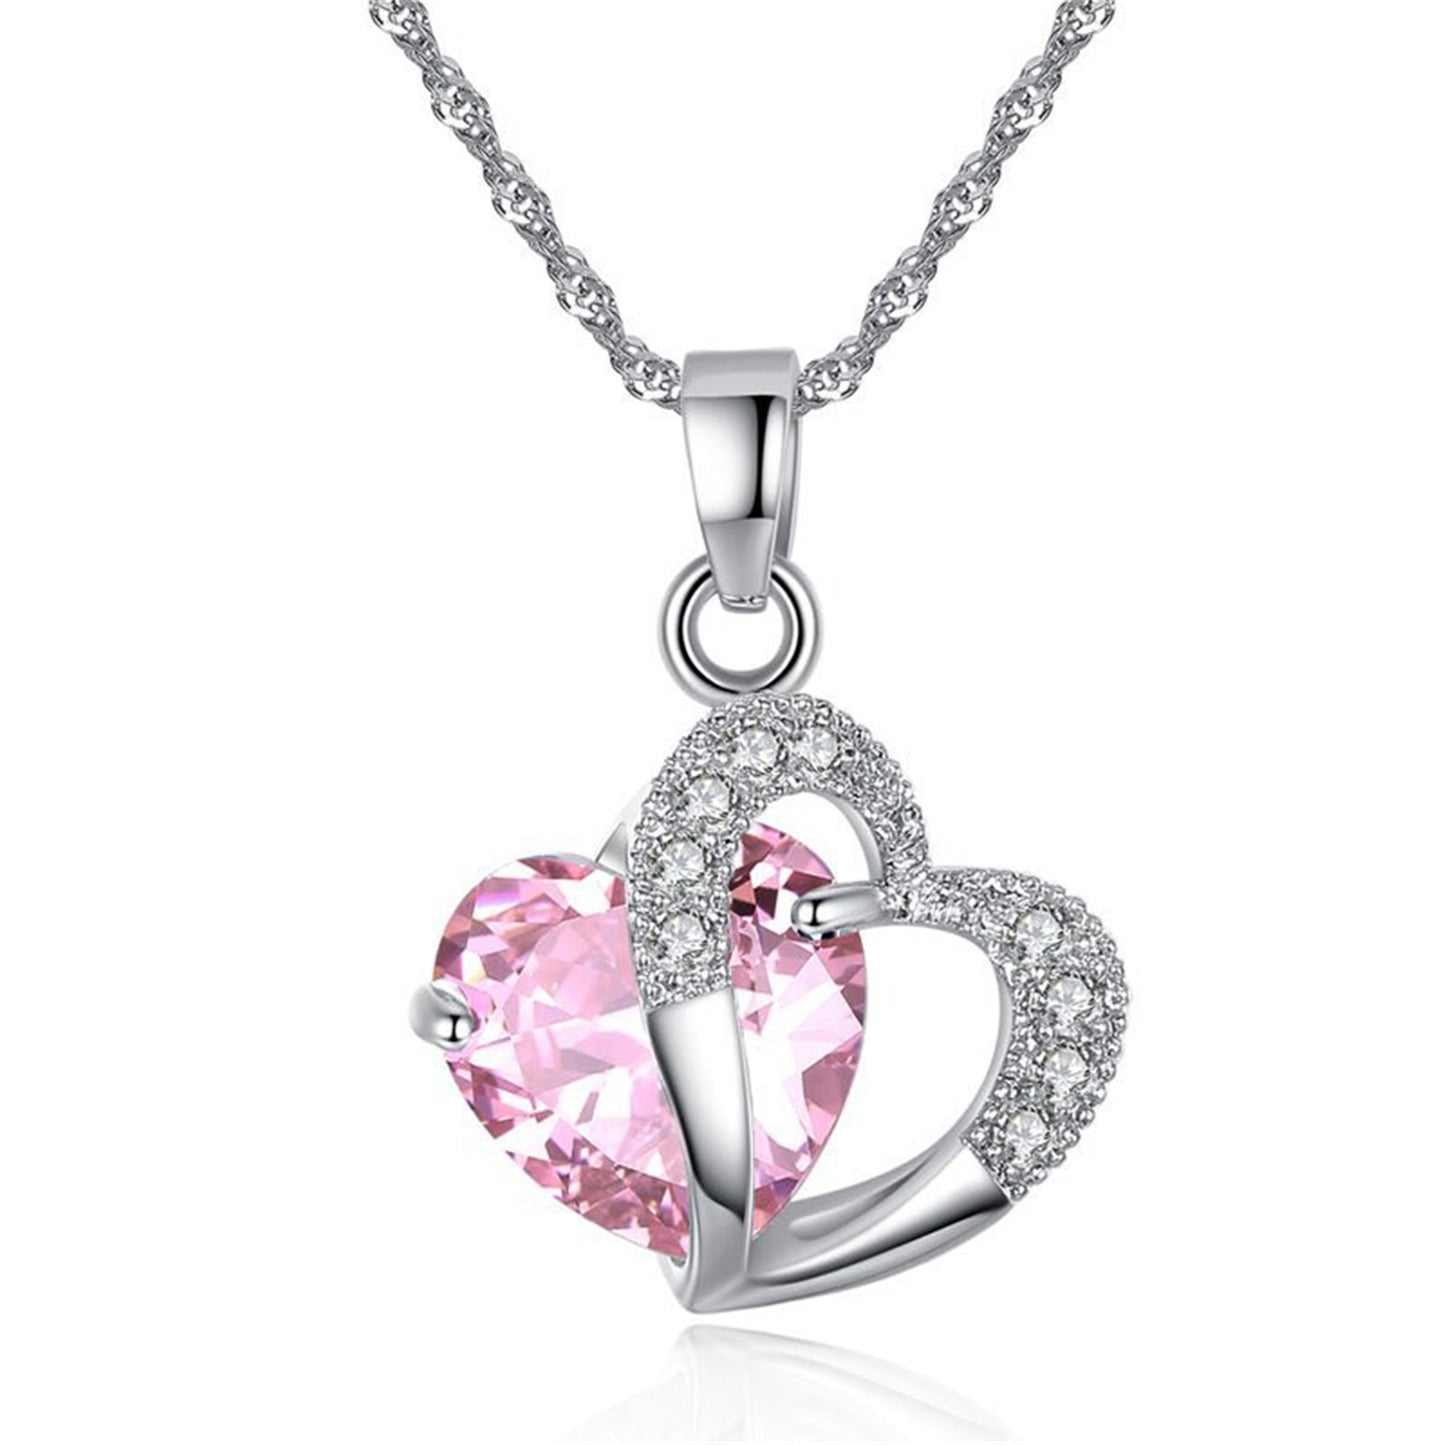 Cubic Zircon Heart Pendant Necklace Heart Shaped Birthstone